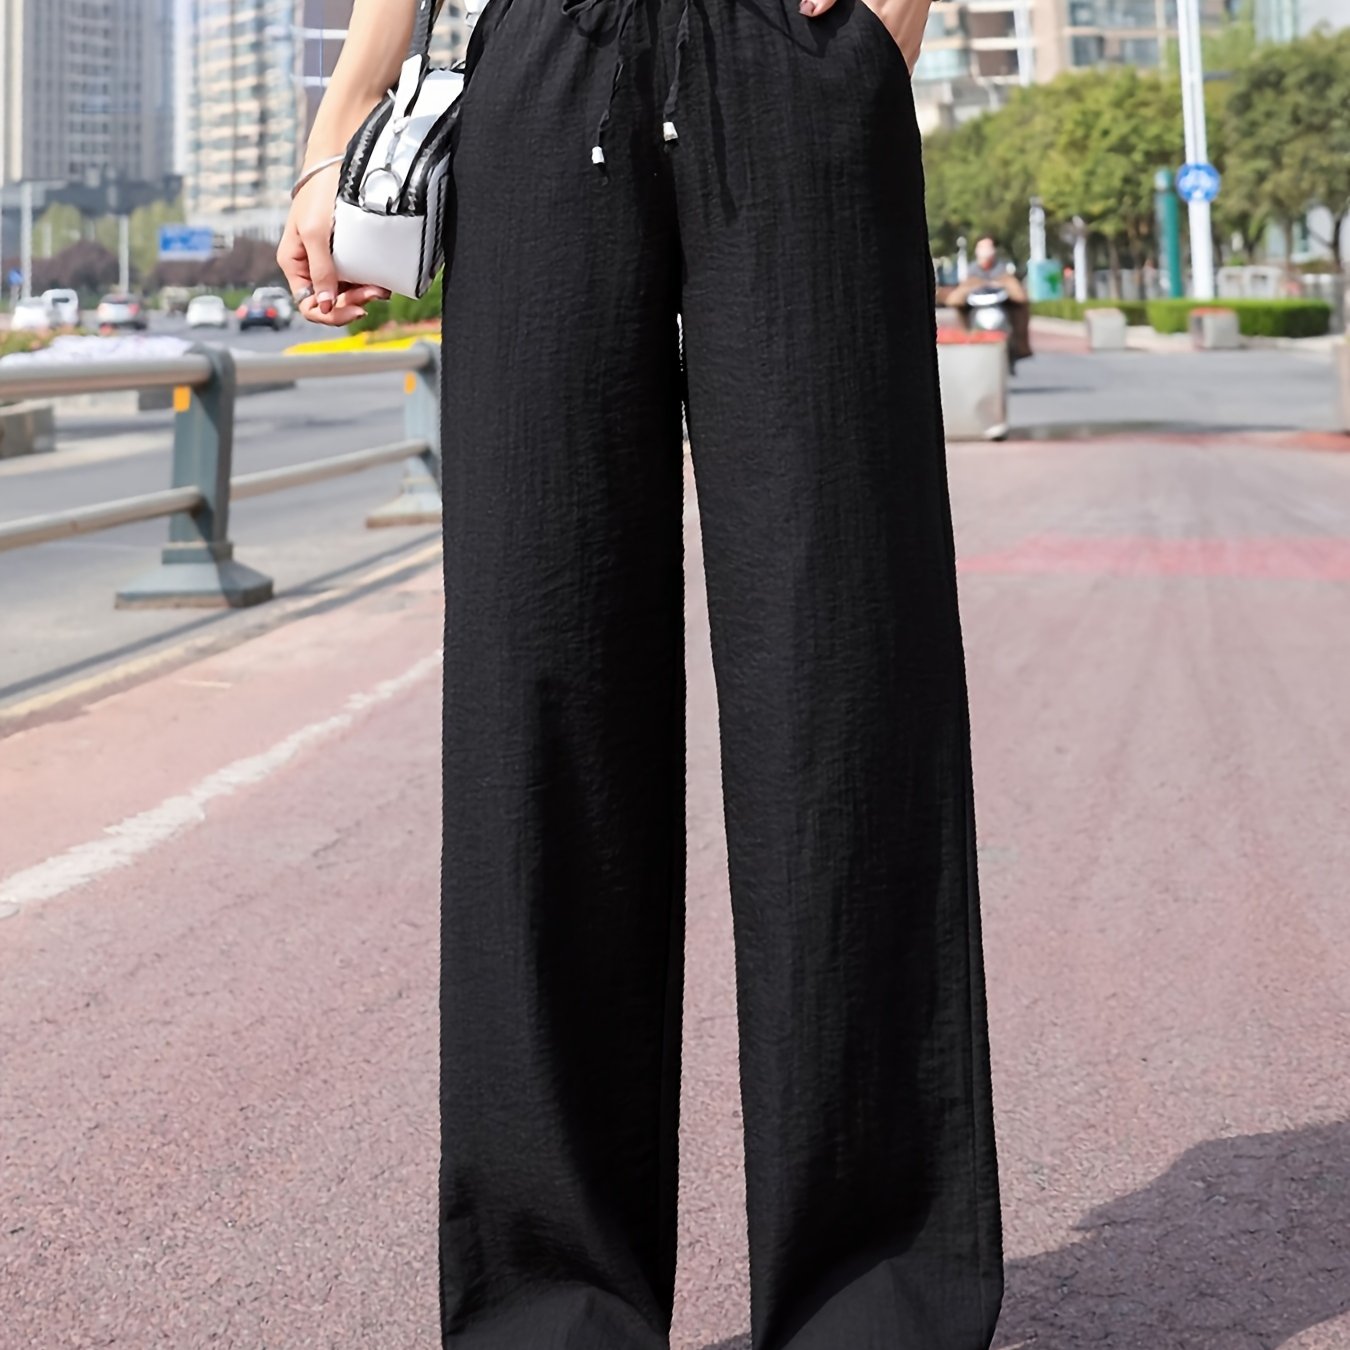 Minimalist Solid Drawstring Pants Casual Long Length Elastic